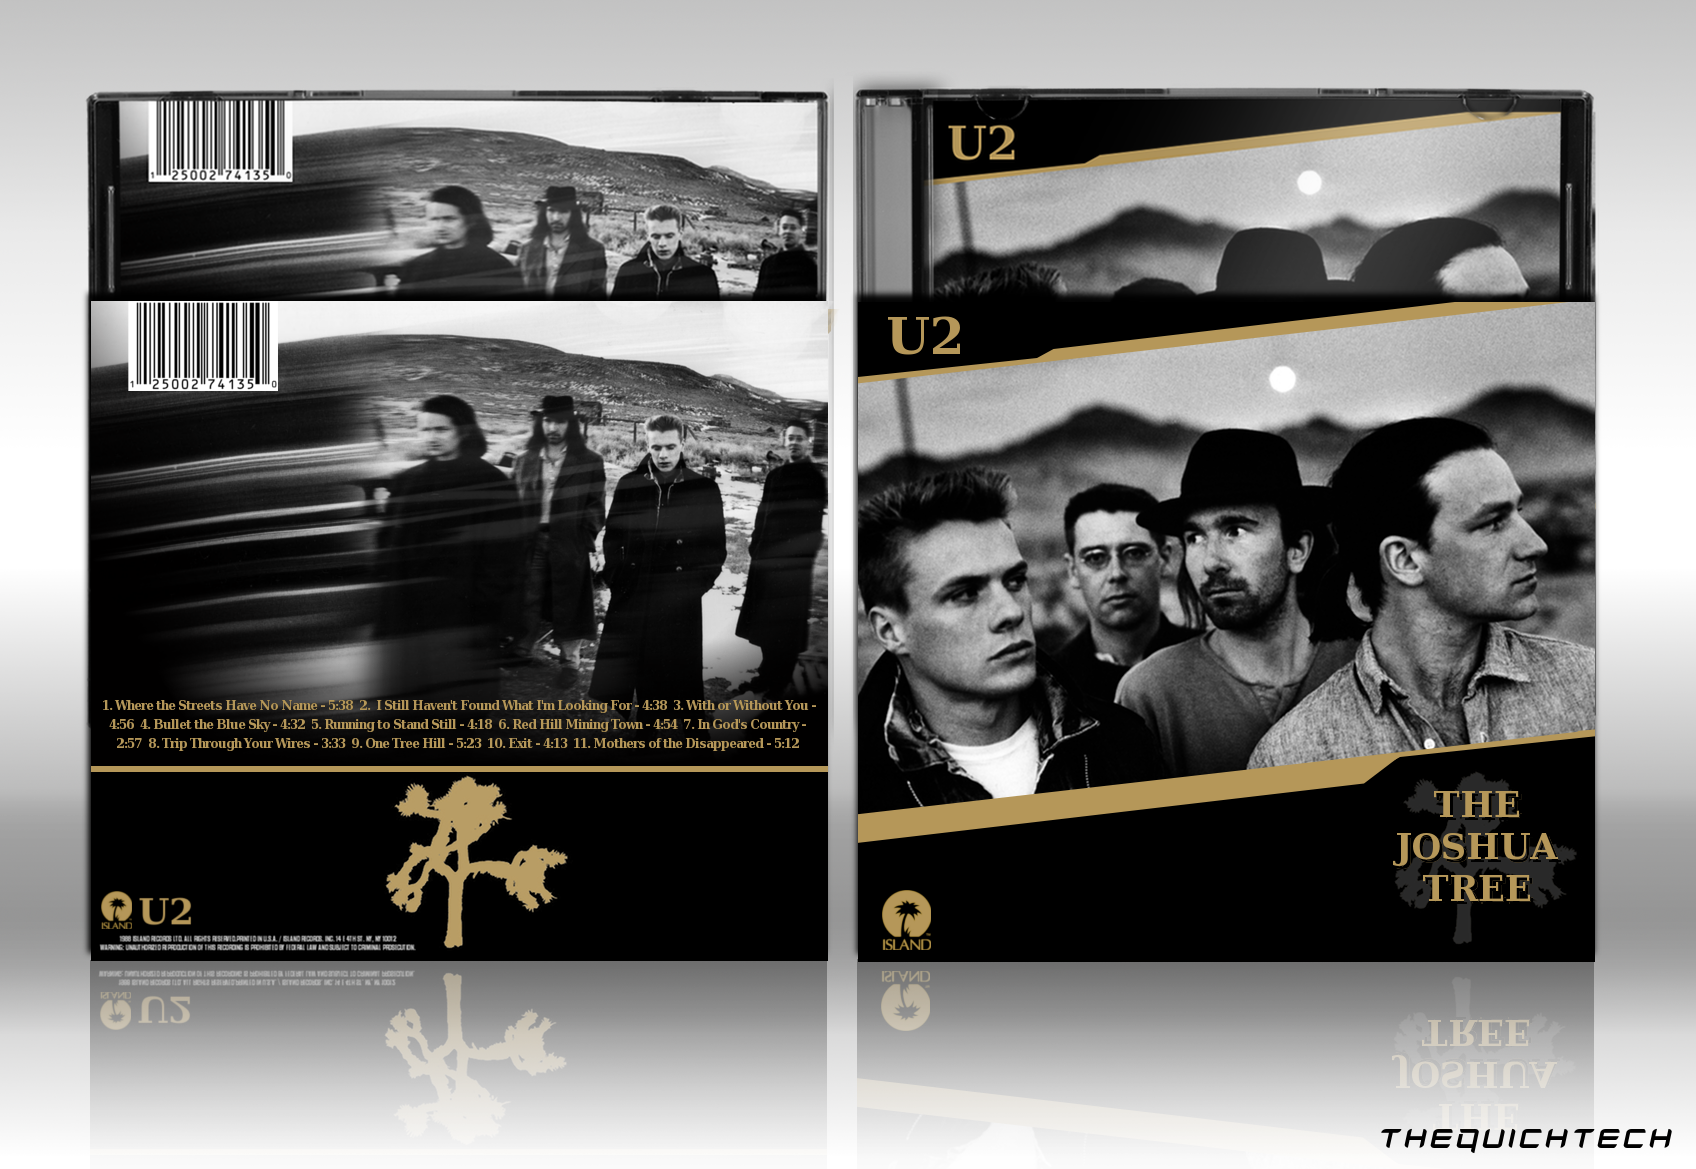 U2 - The Joshua Tree box cover